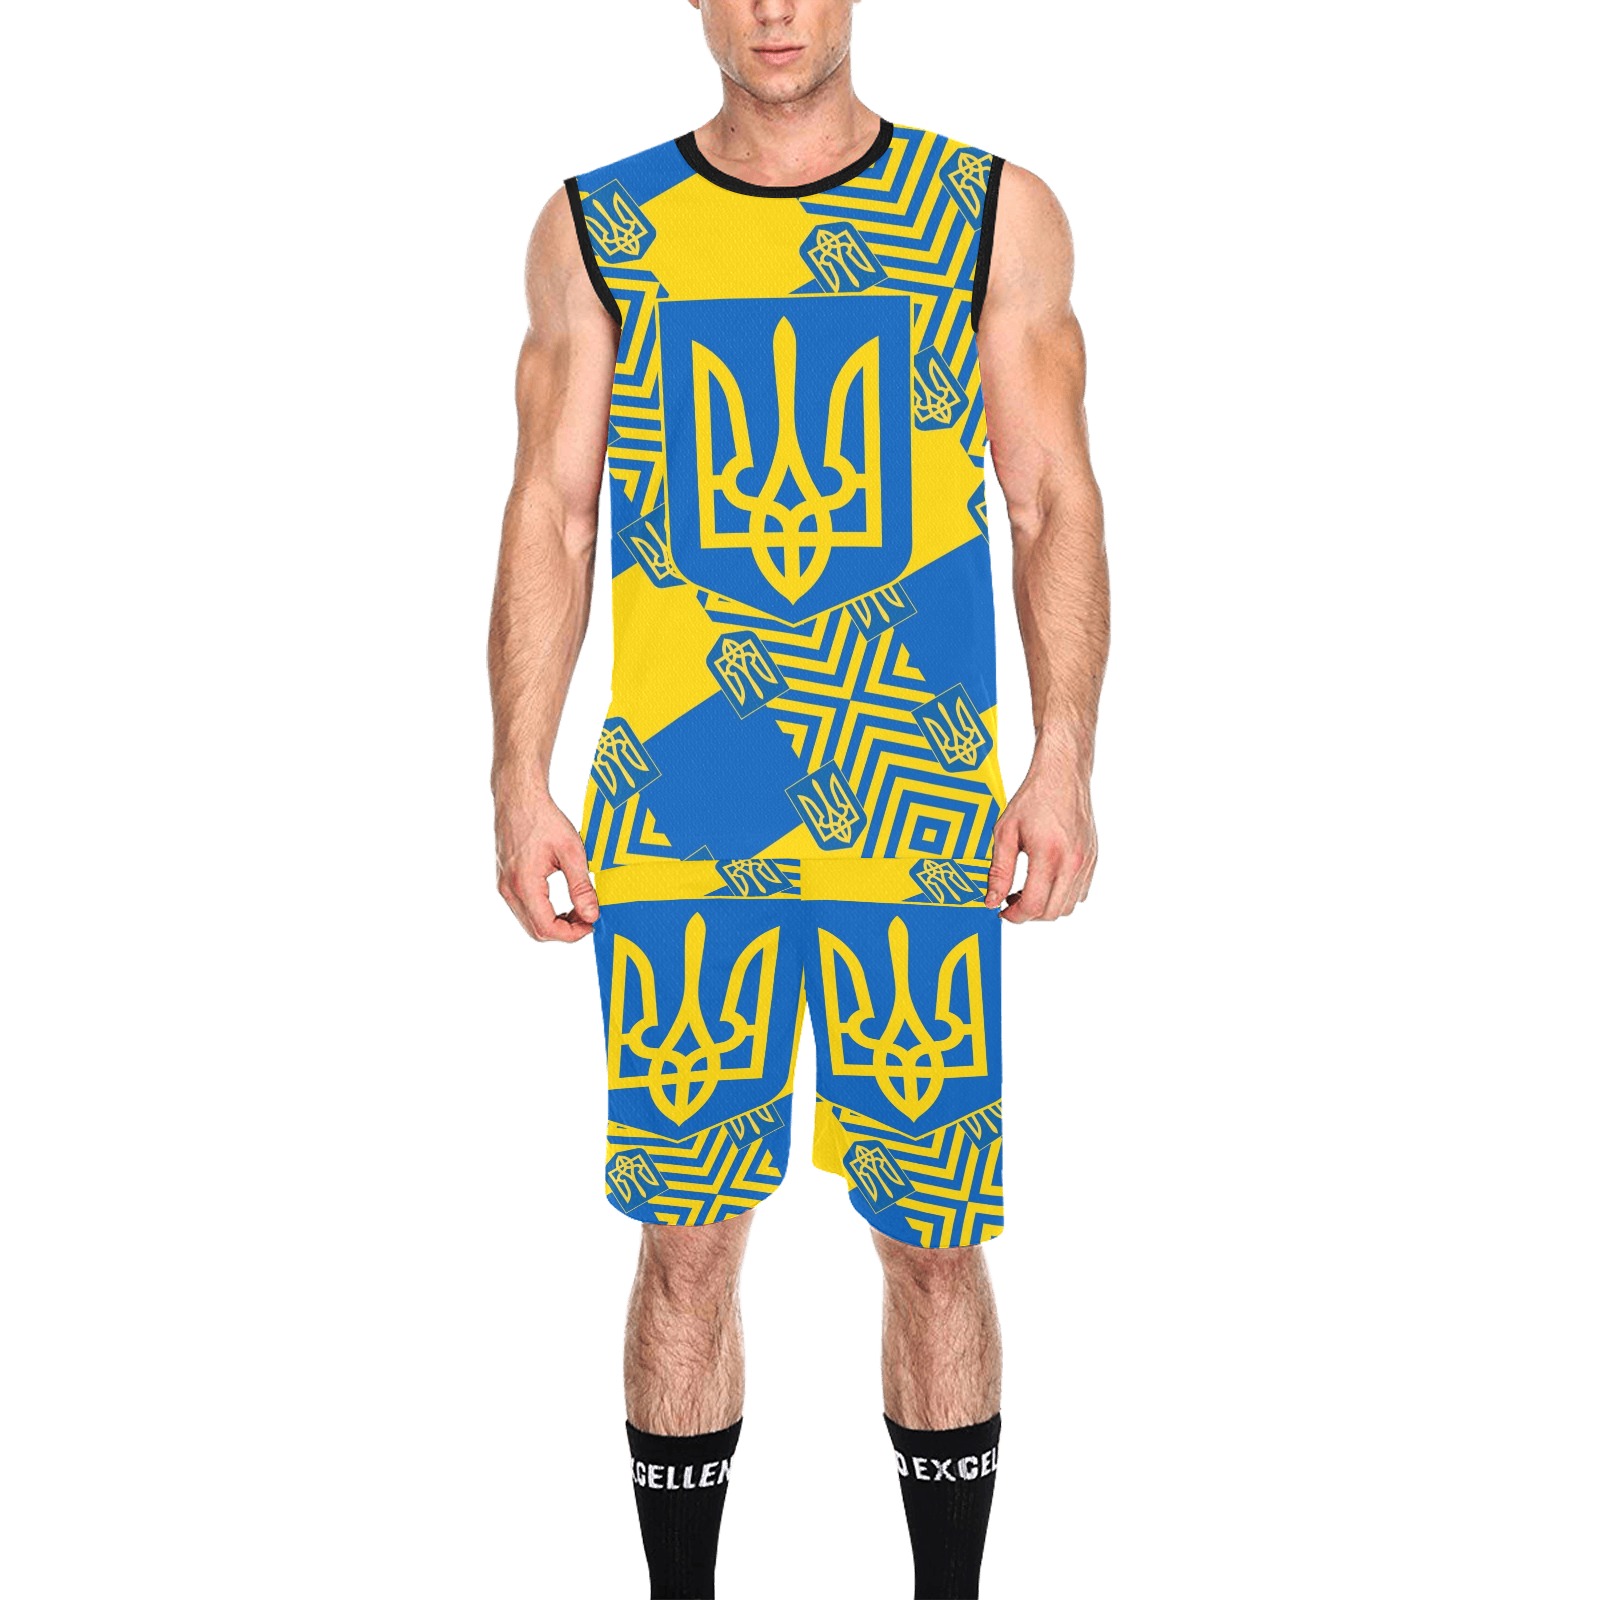 UKRAINE 2 All Over Print Basketball Uniform